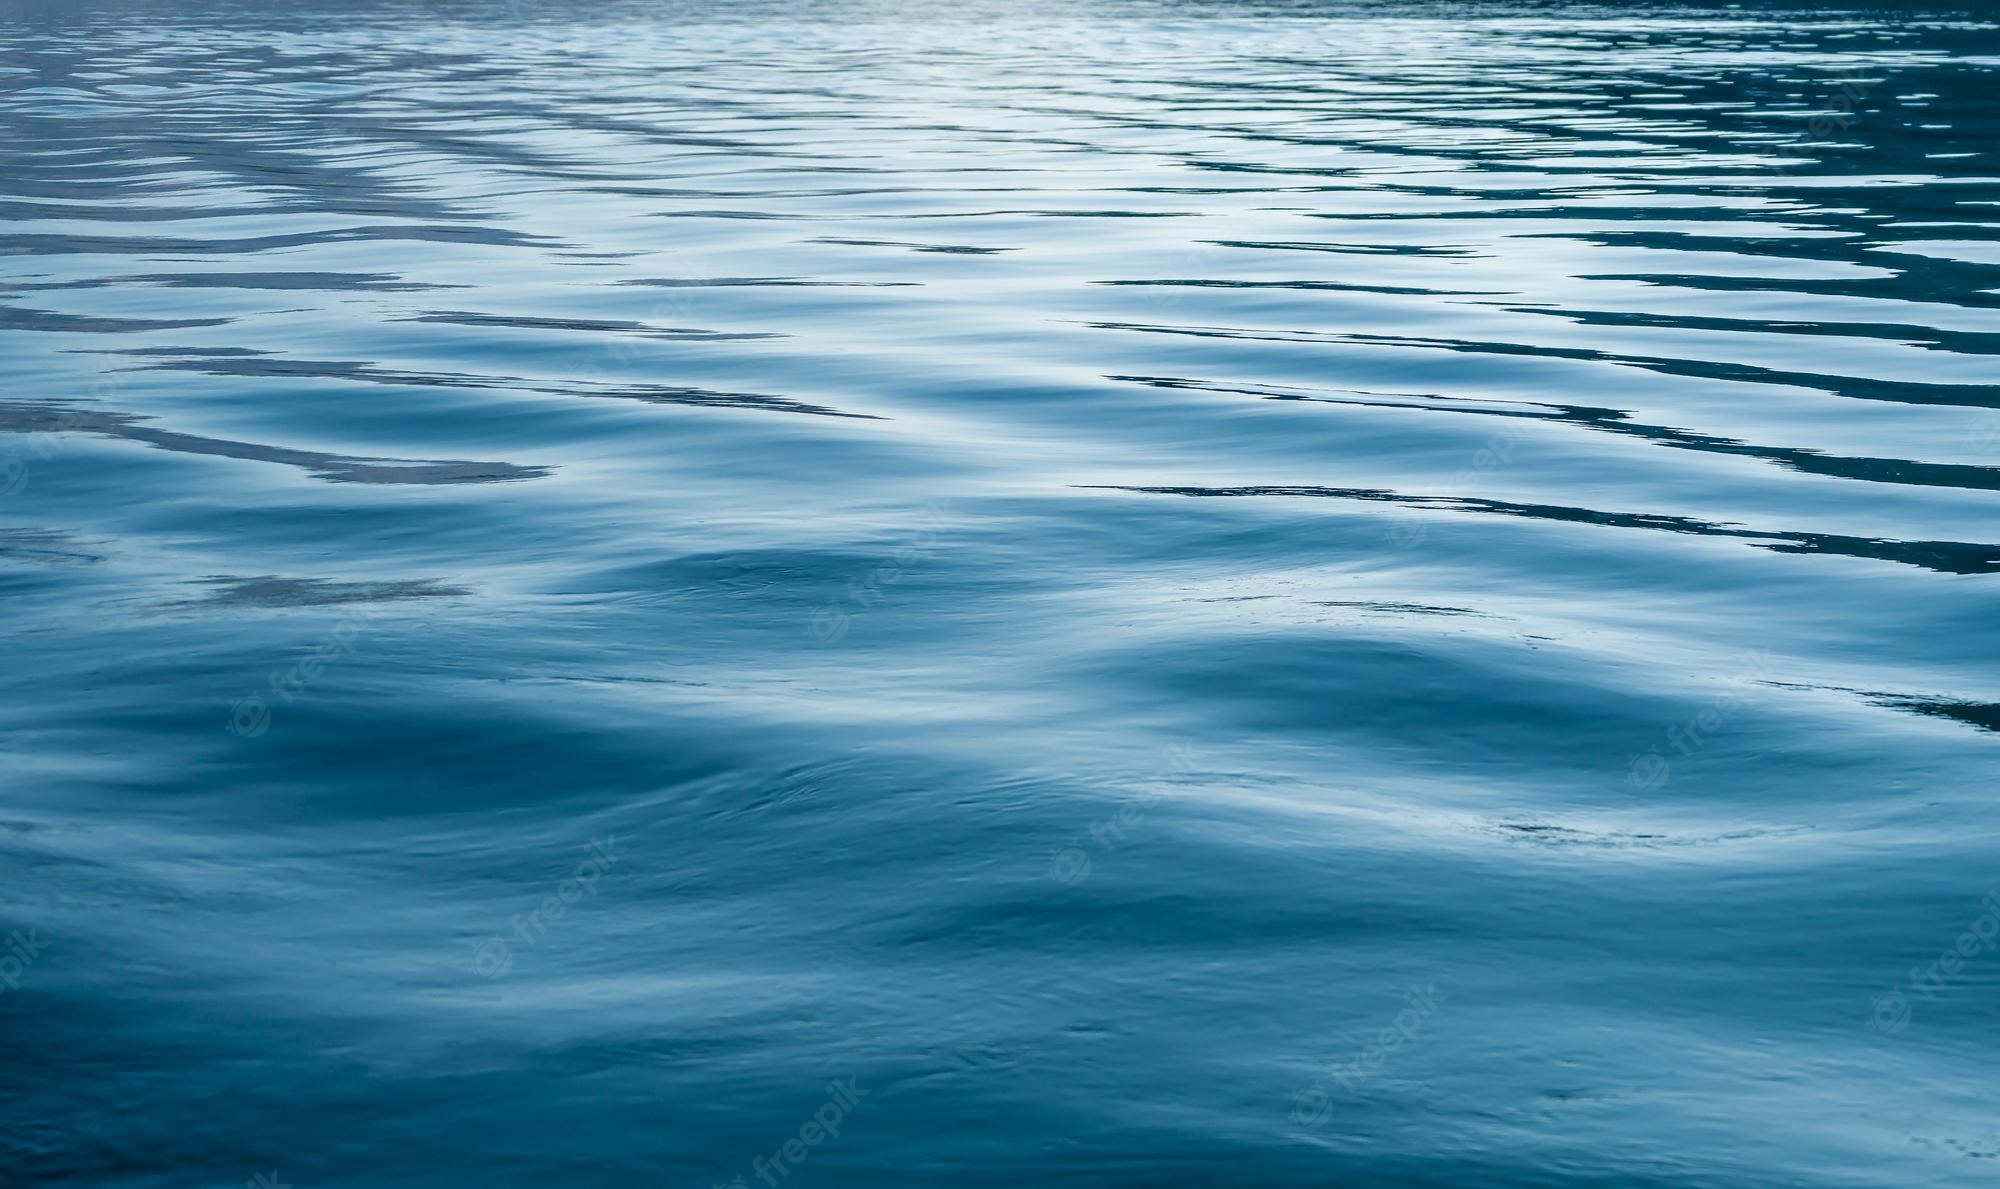 Blue Water Wave Images - Free Download on Freepik